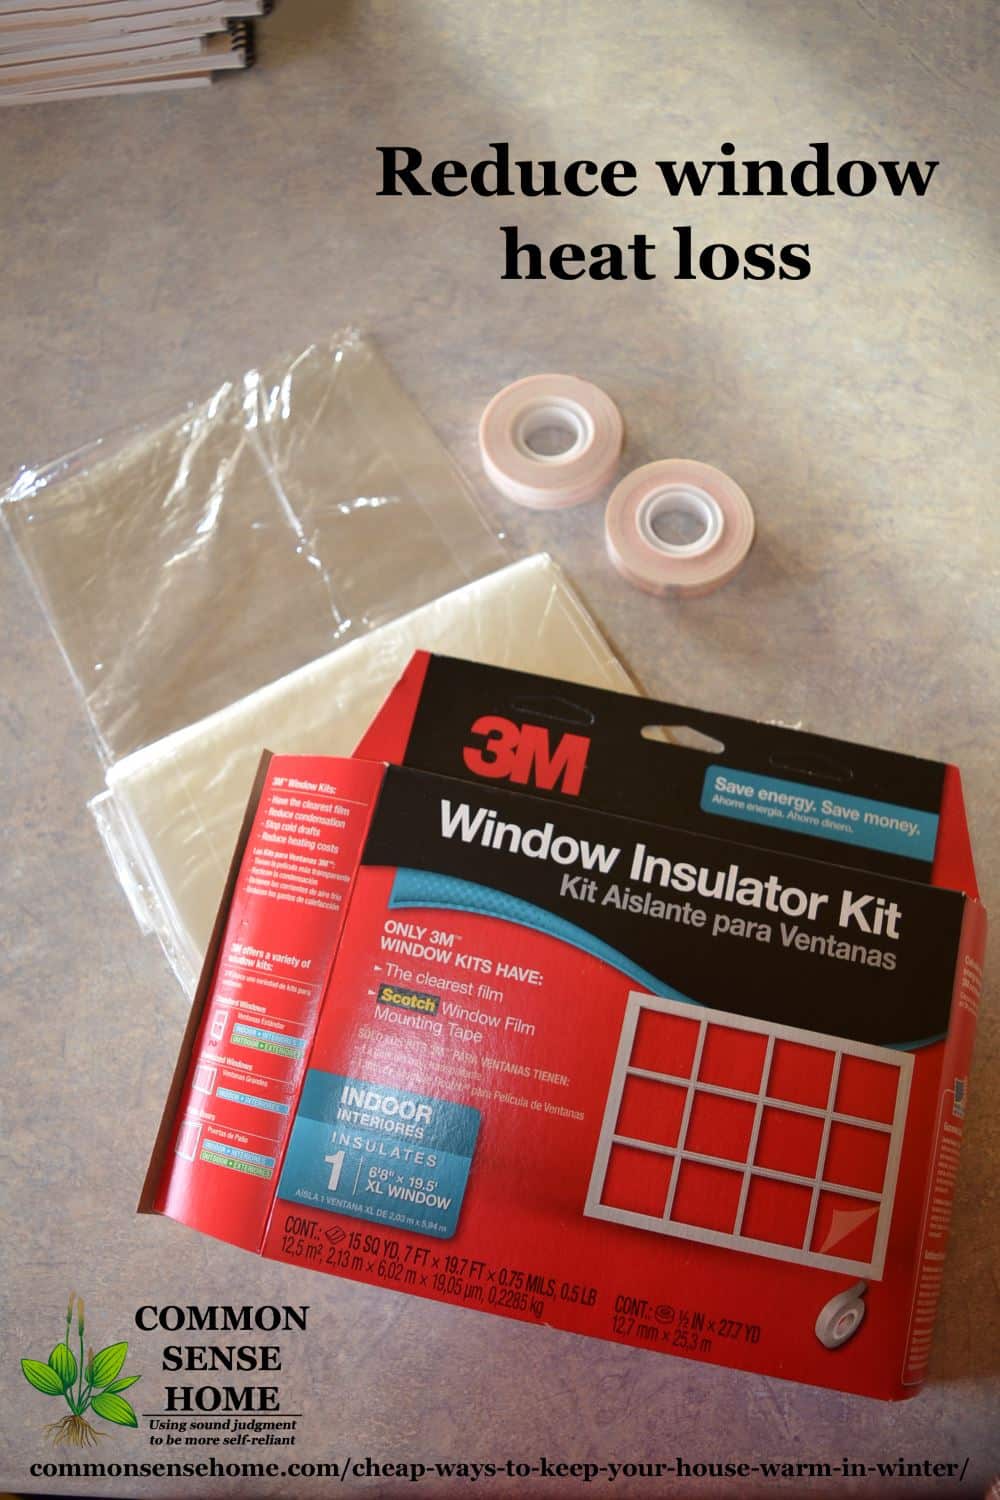 Window insulator kit